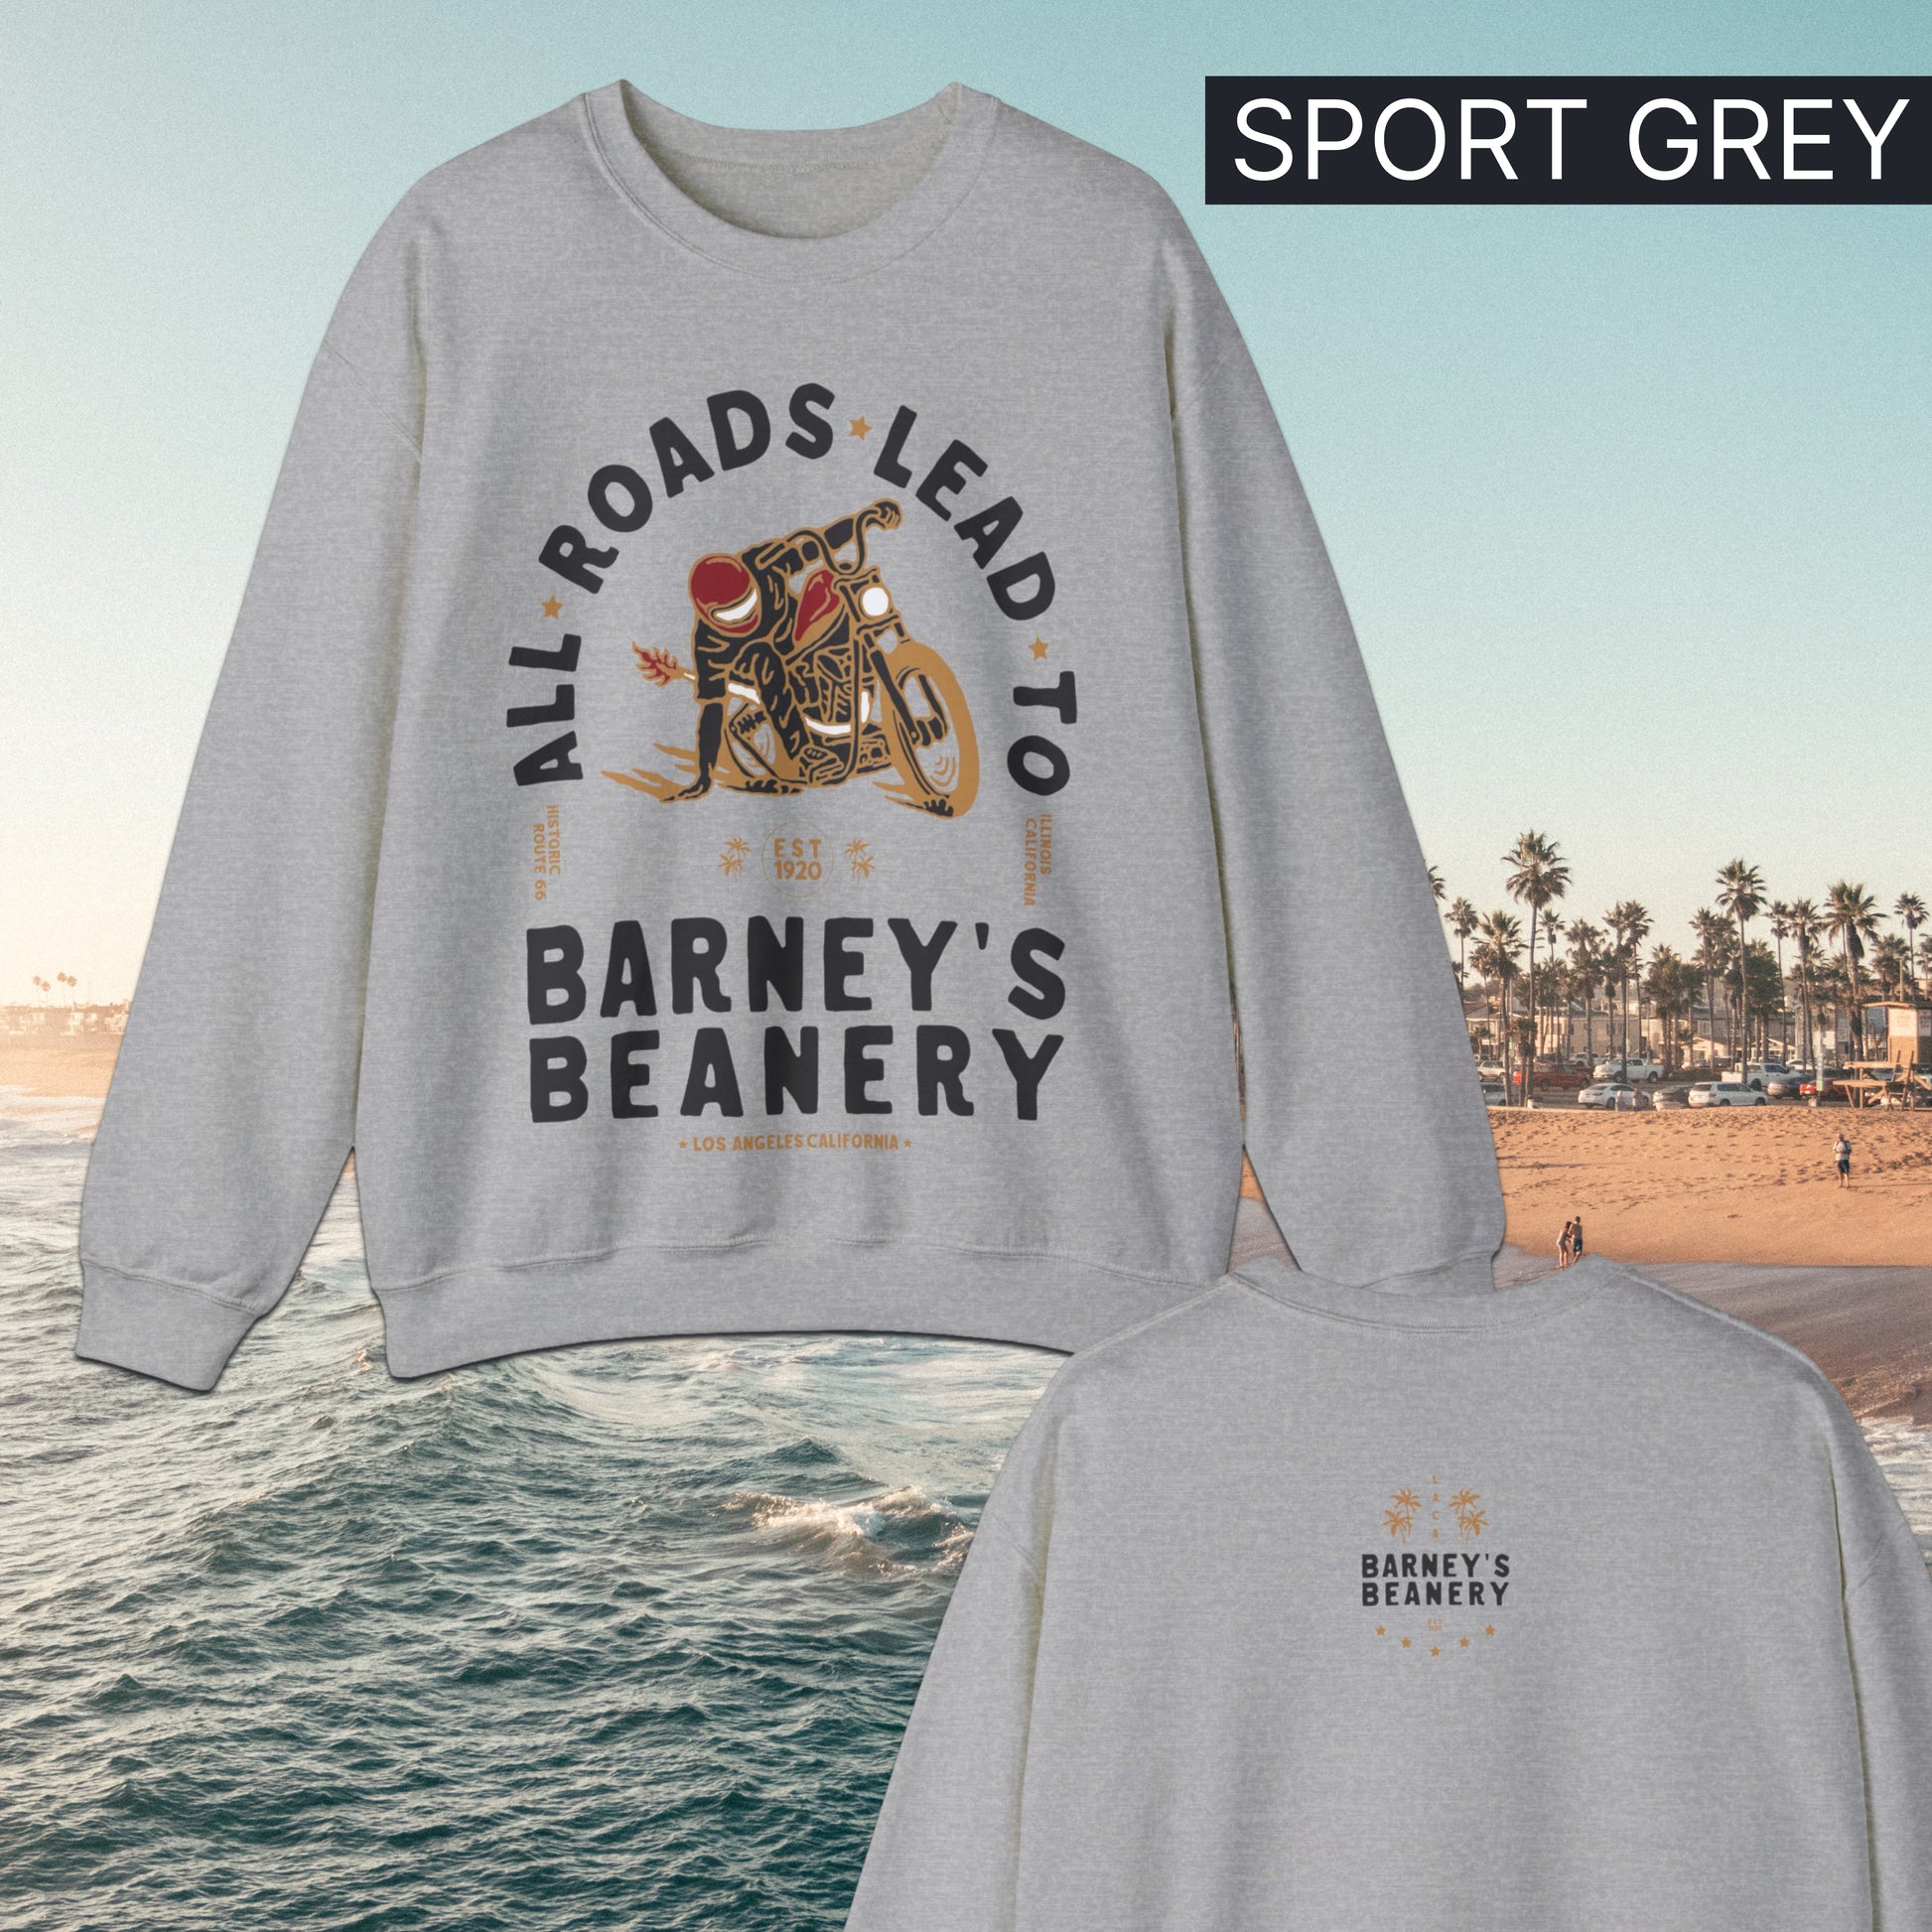 All Roads Lead To | BARNEY'S BEANERY - Women's Graphic Sweatshirt | Sport Grey Gildan 18000 Sweatshirt - Front And Back Flat Lay View